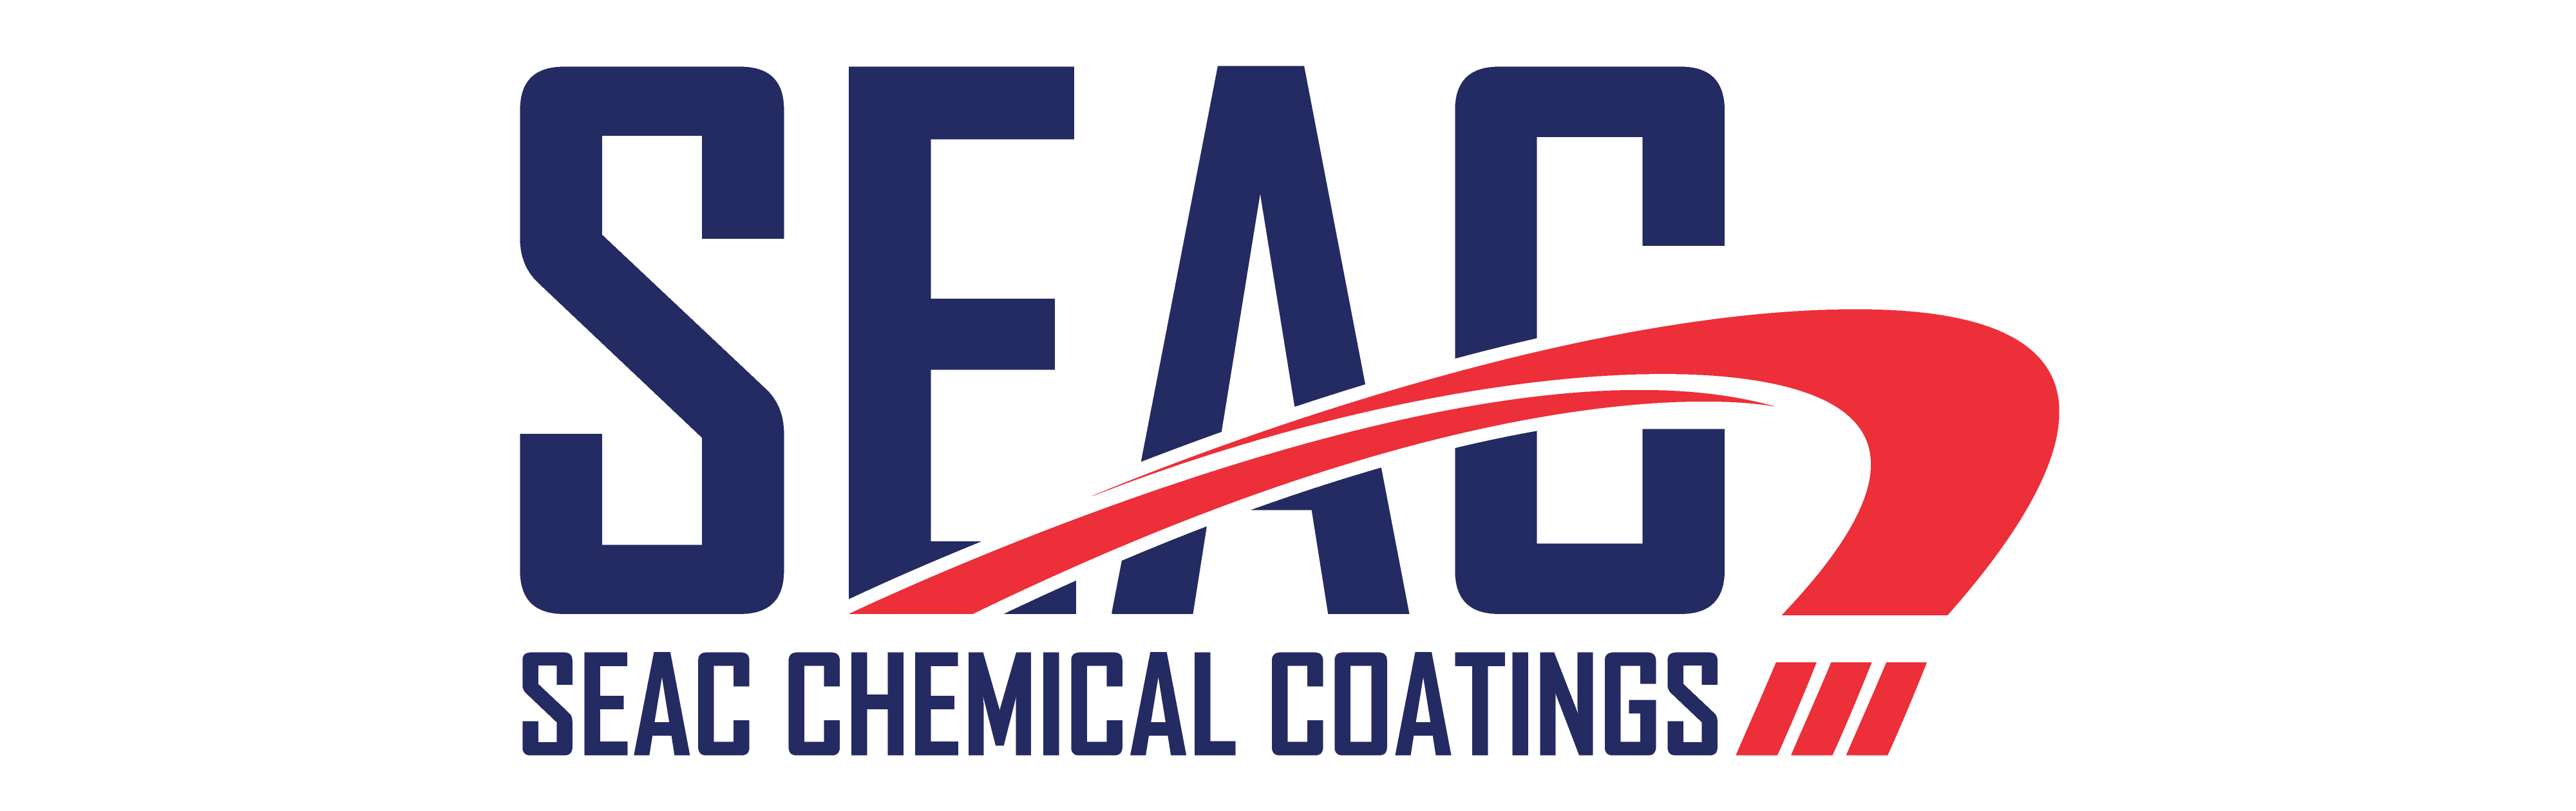 SEAC Chemical Coatings